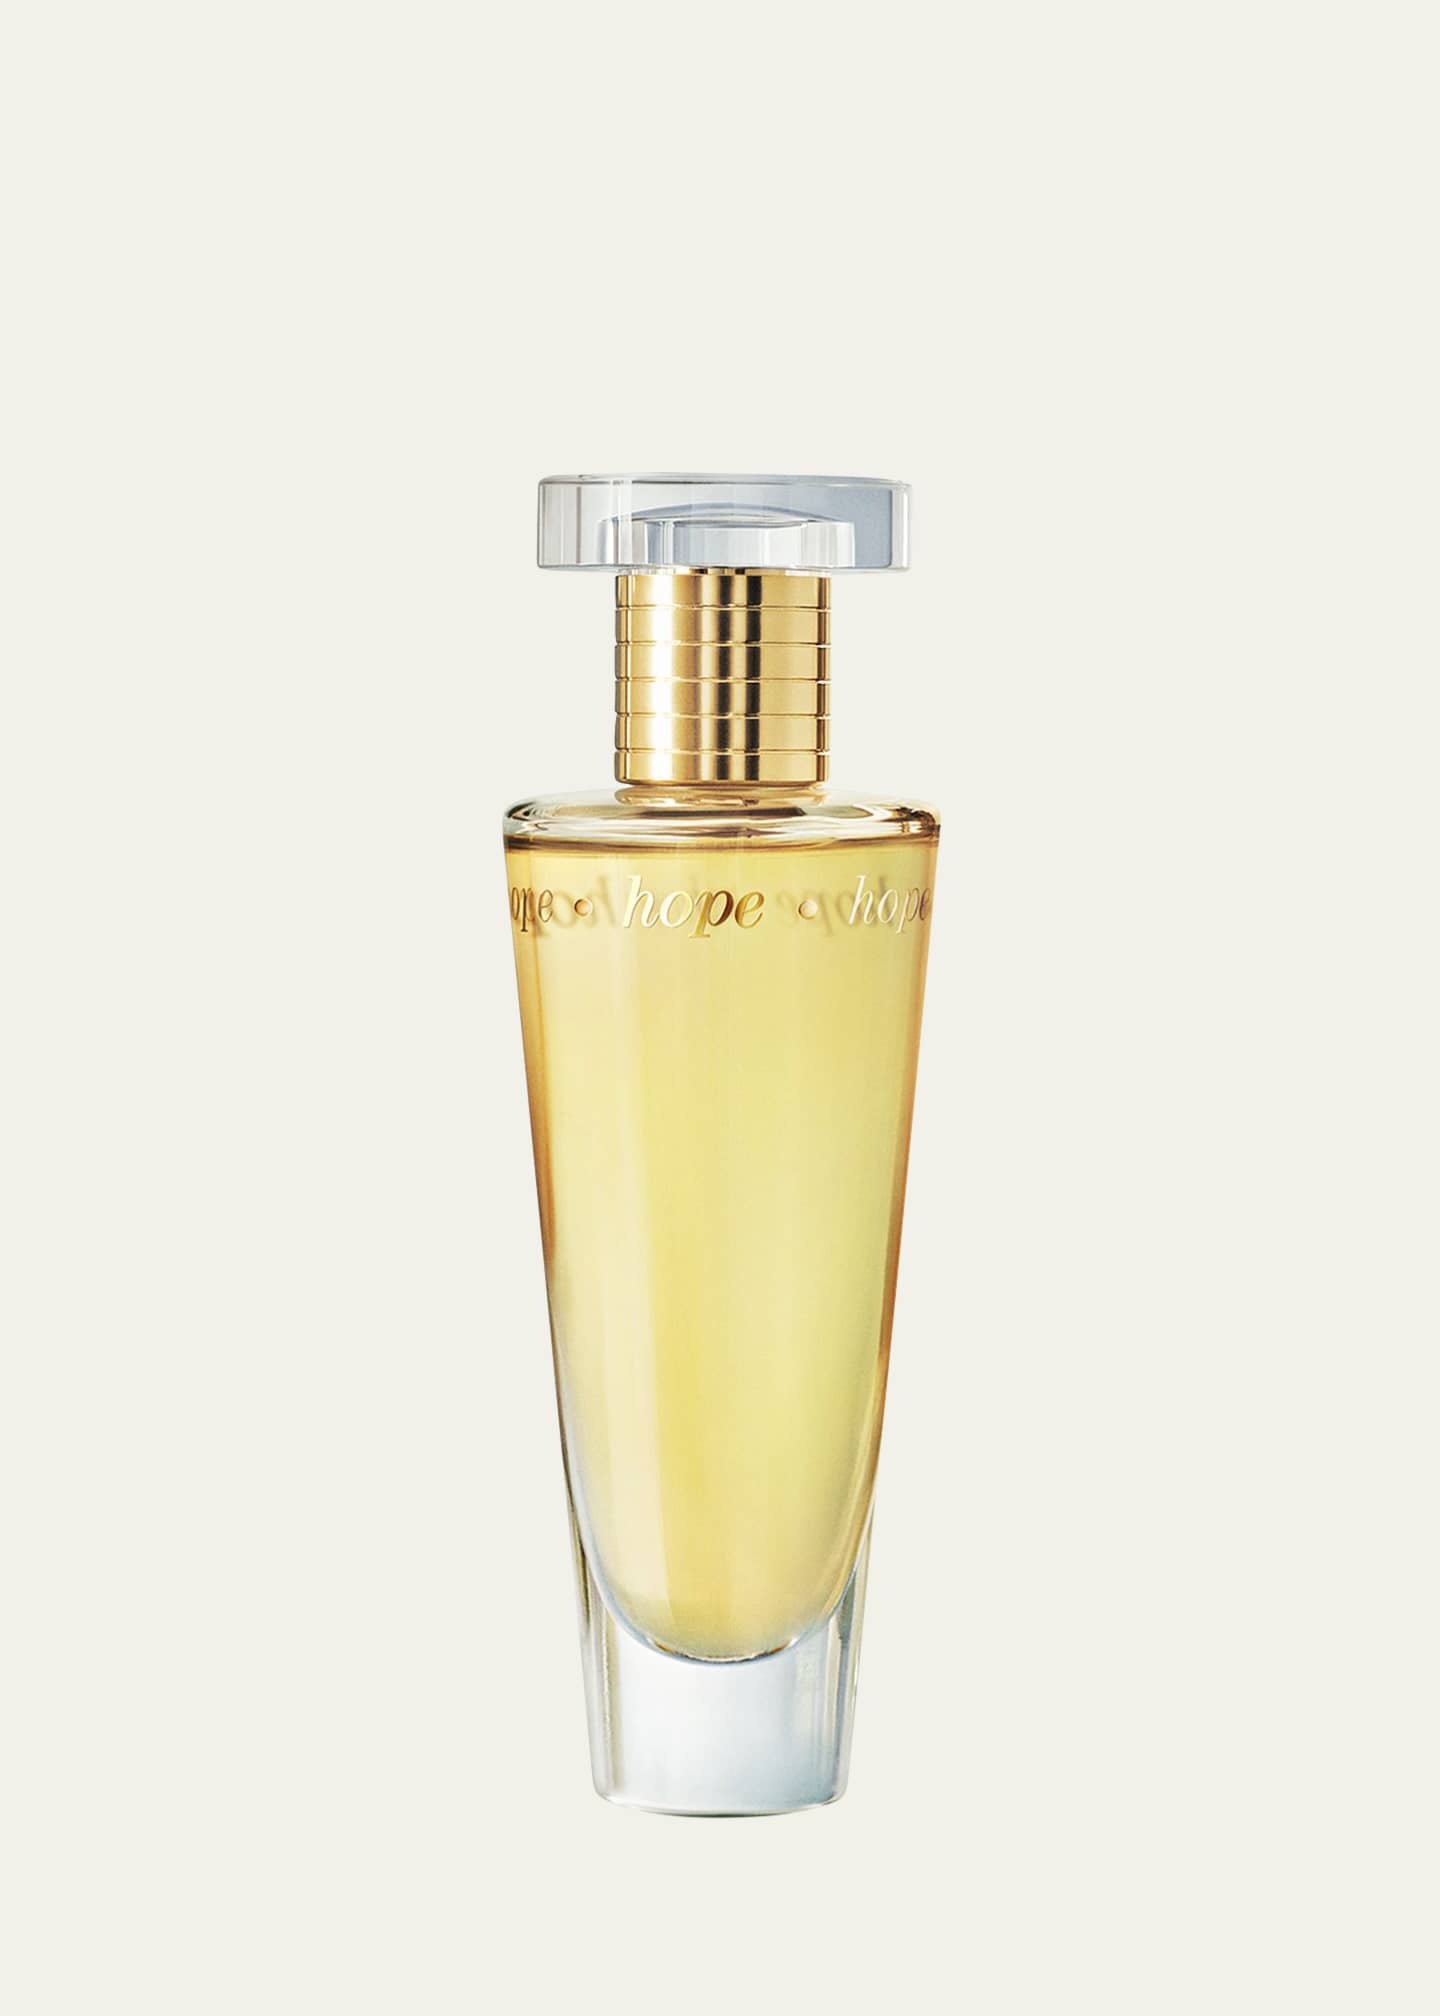 DREAM ANGEL Perfume Victoria's Secret 1.7 Oz 50 ml EDP Eau De Parfum Spray  Women